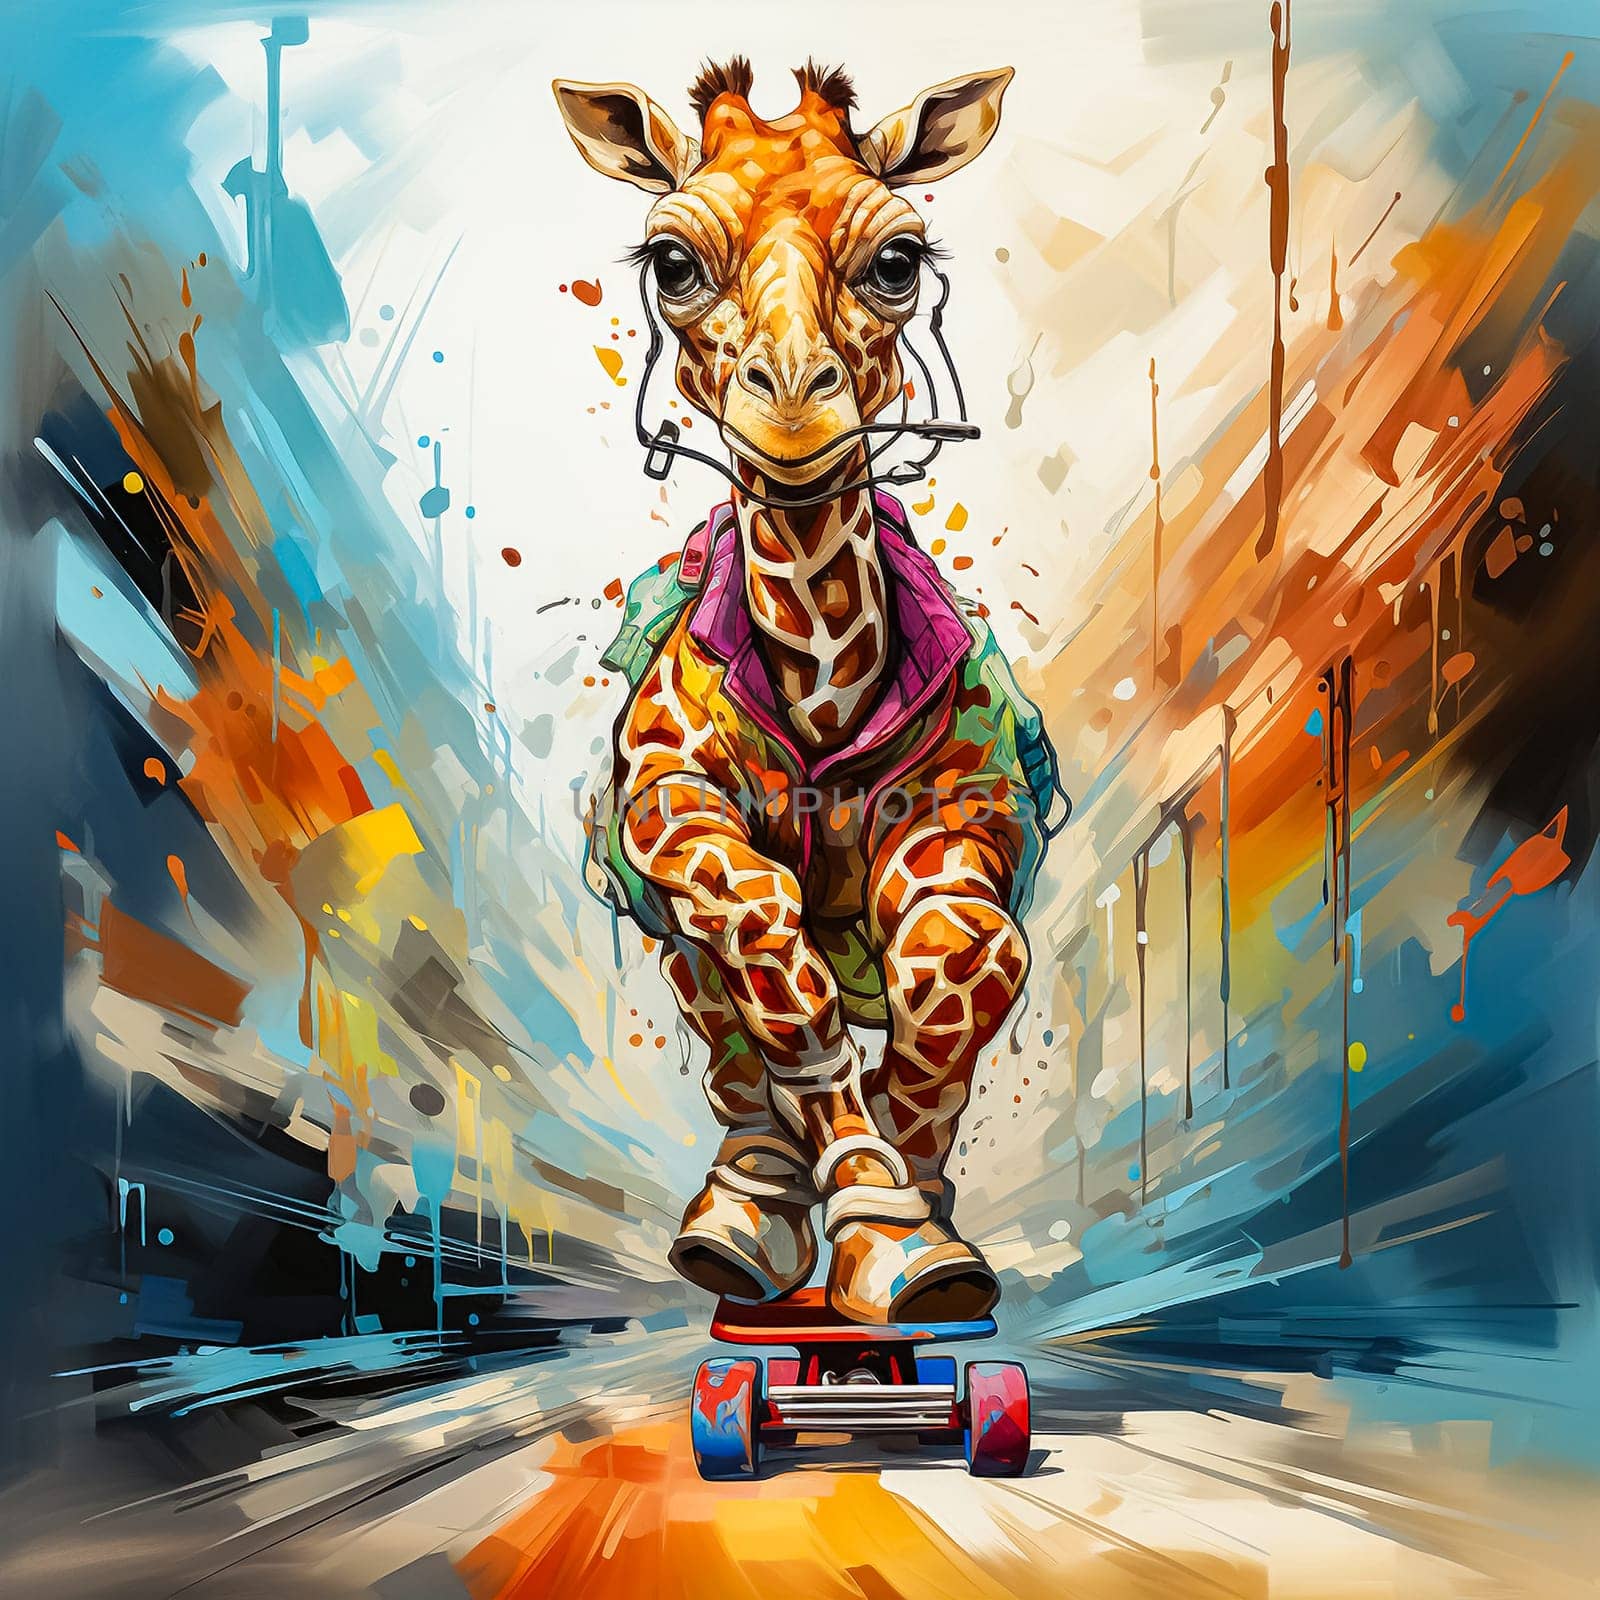 A watercolor illustration of a fashionable giraffe on a skateboard by Alla_Morozova93